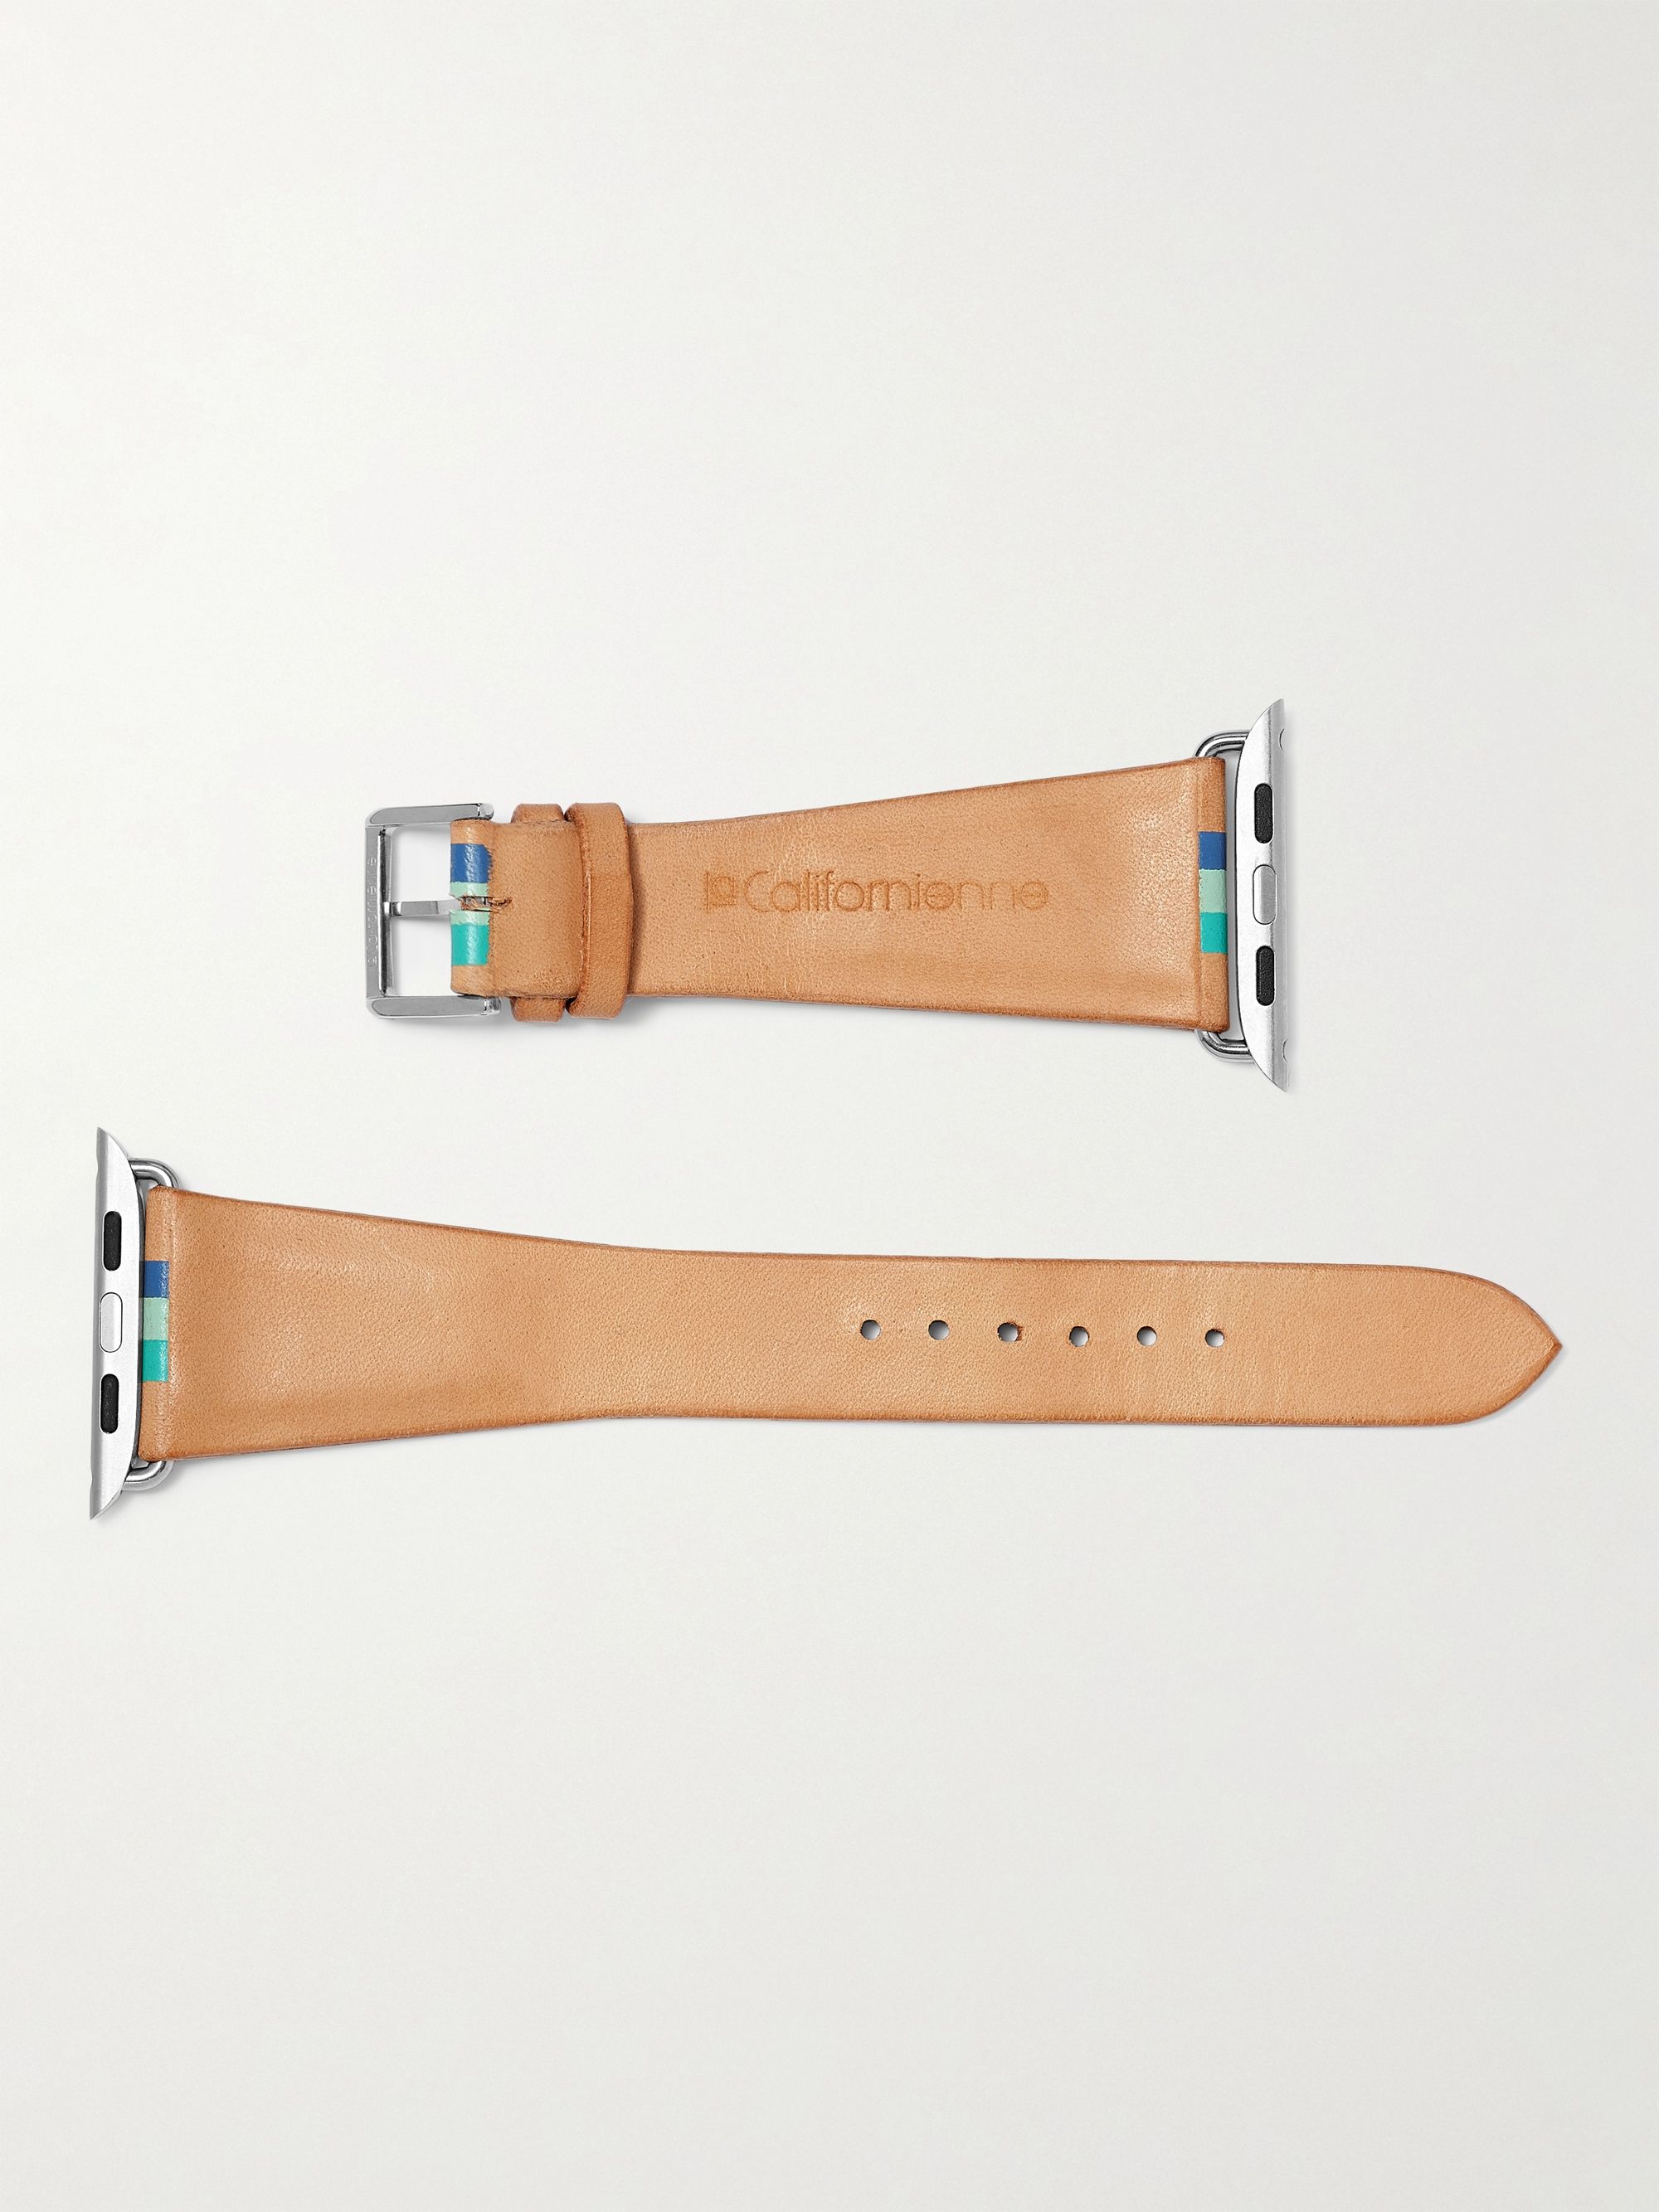 LA CALIFORNIENNE Aquamarine Striped Leather Watch Strap